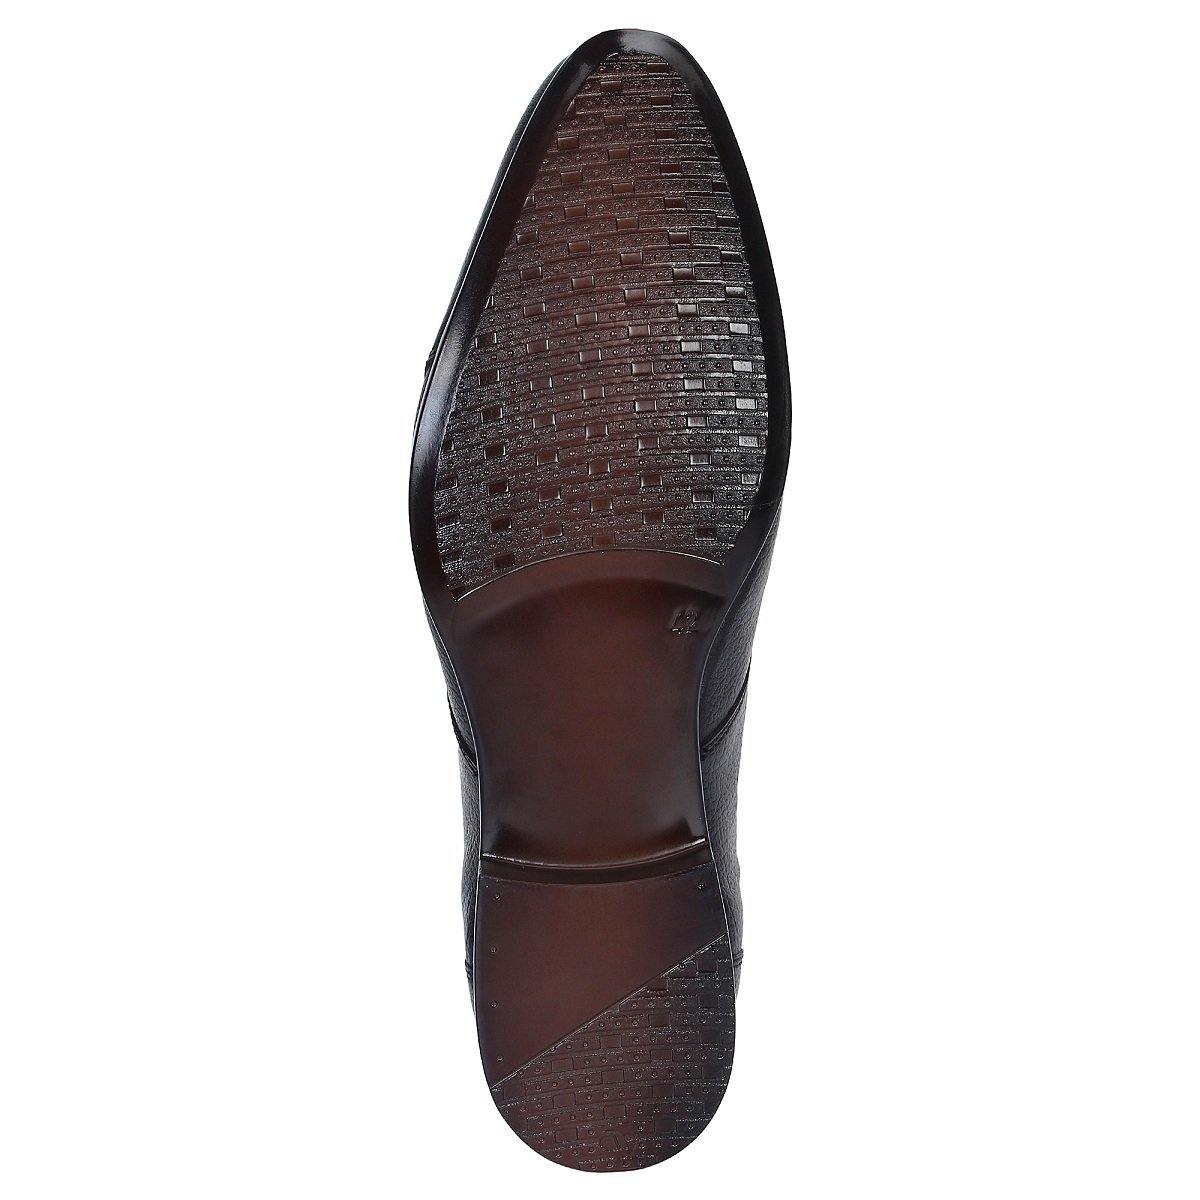 SeeandWear Black Formal Suit Shoes for Men - Minor Defect - SeeandWear